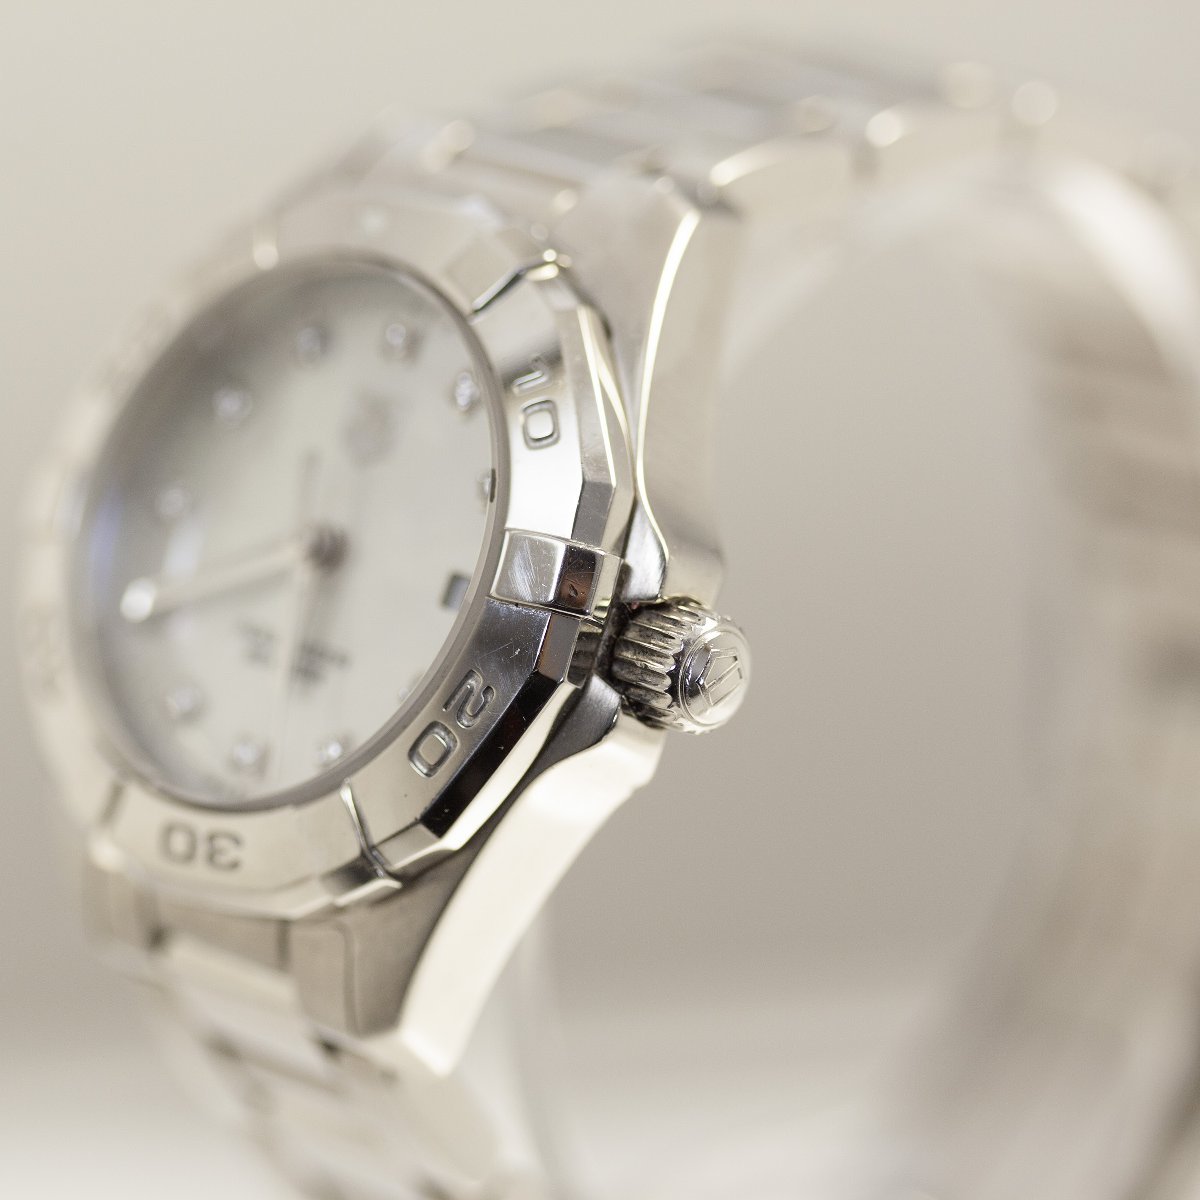  TAG Heuer Aquaracer lady's wristwatch WAY1413 used operation goods 